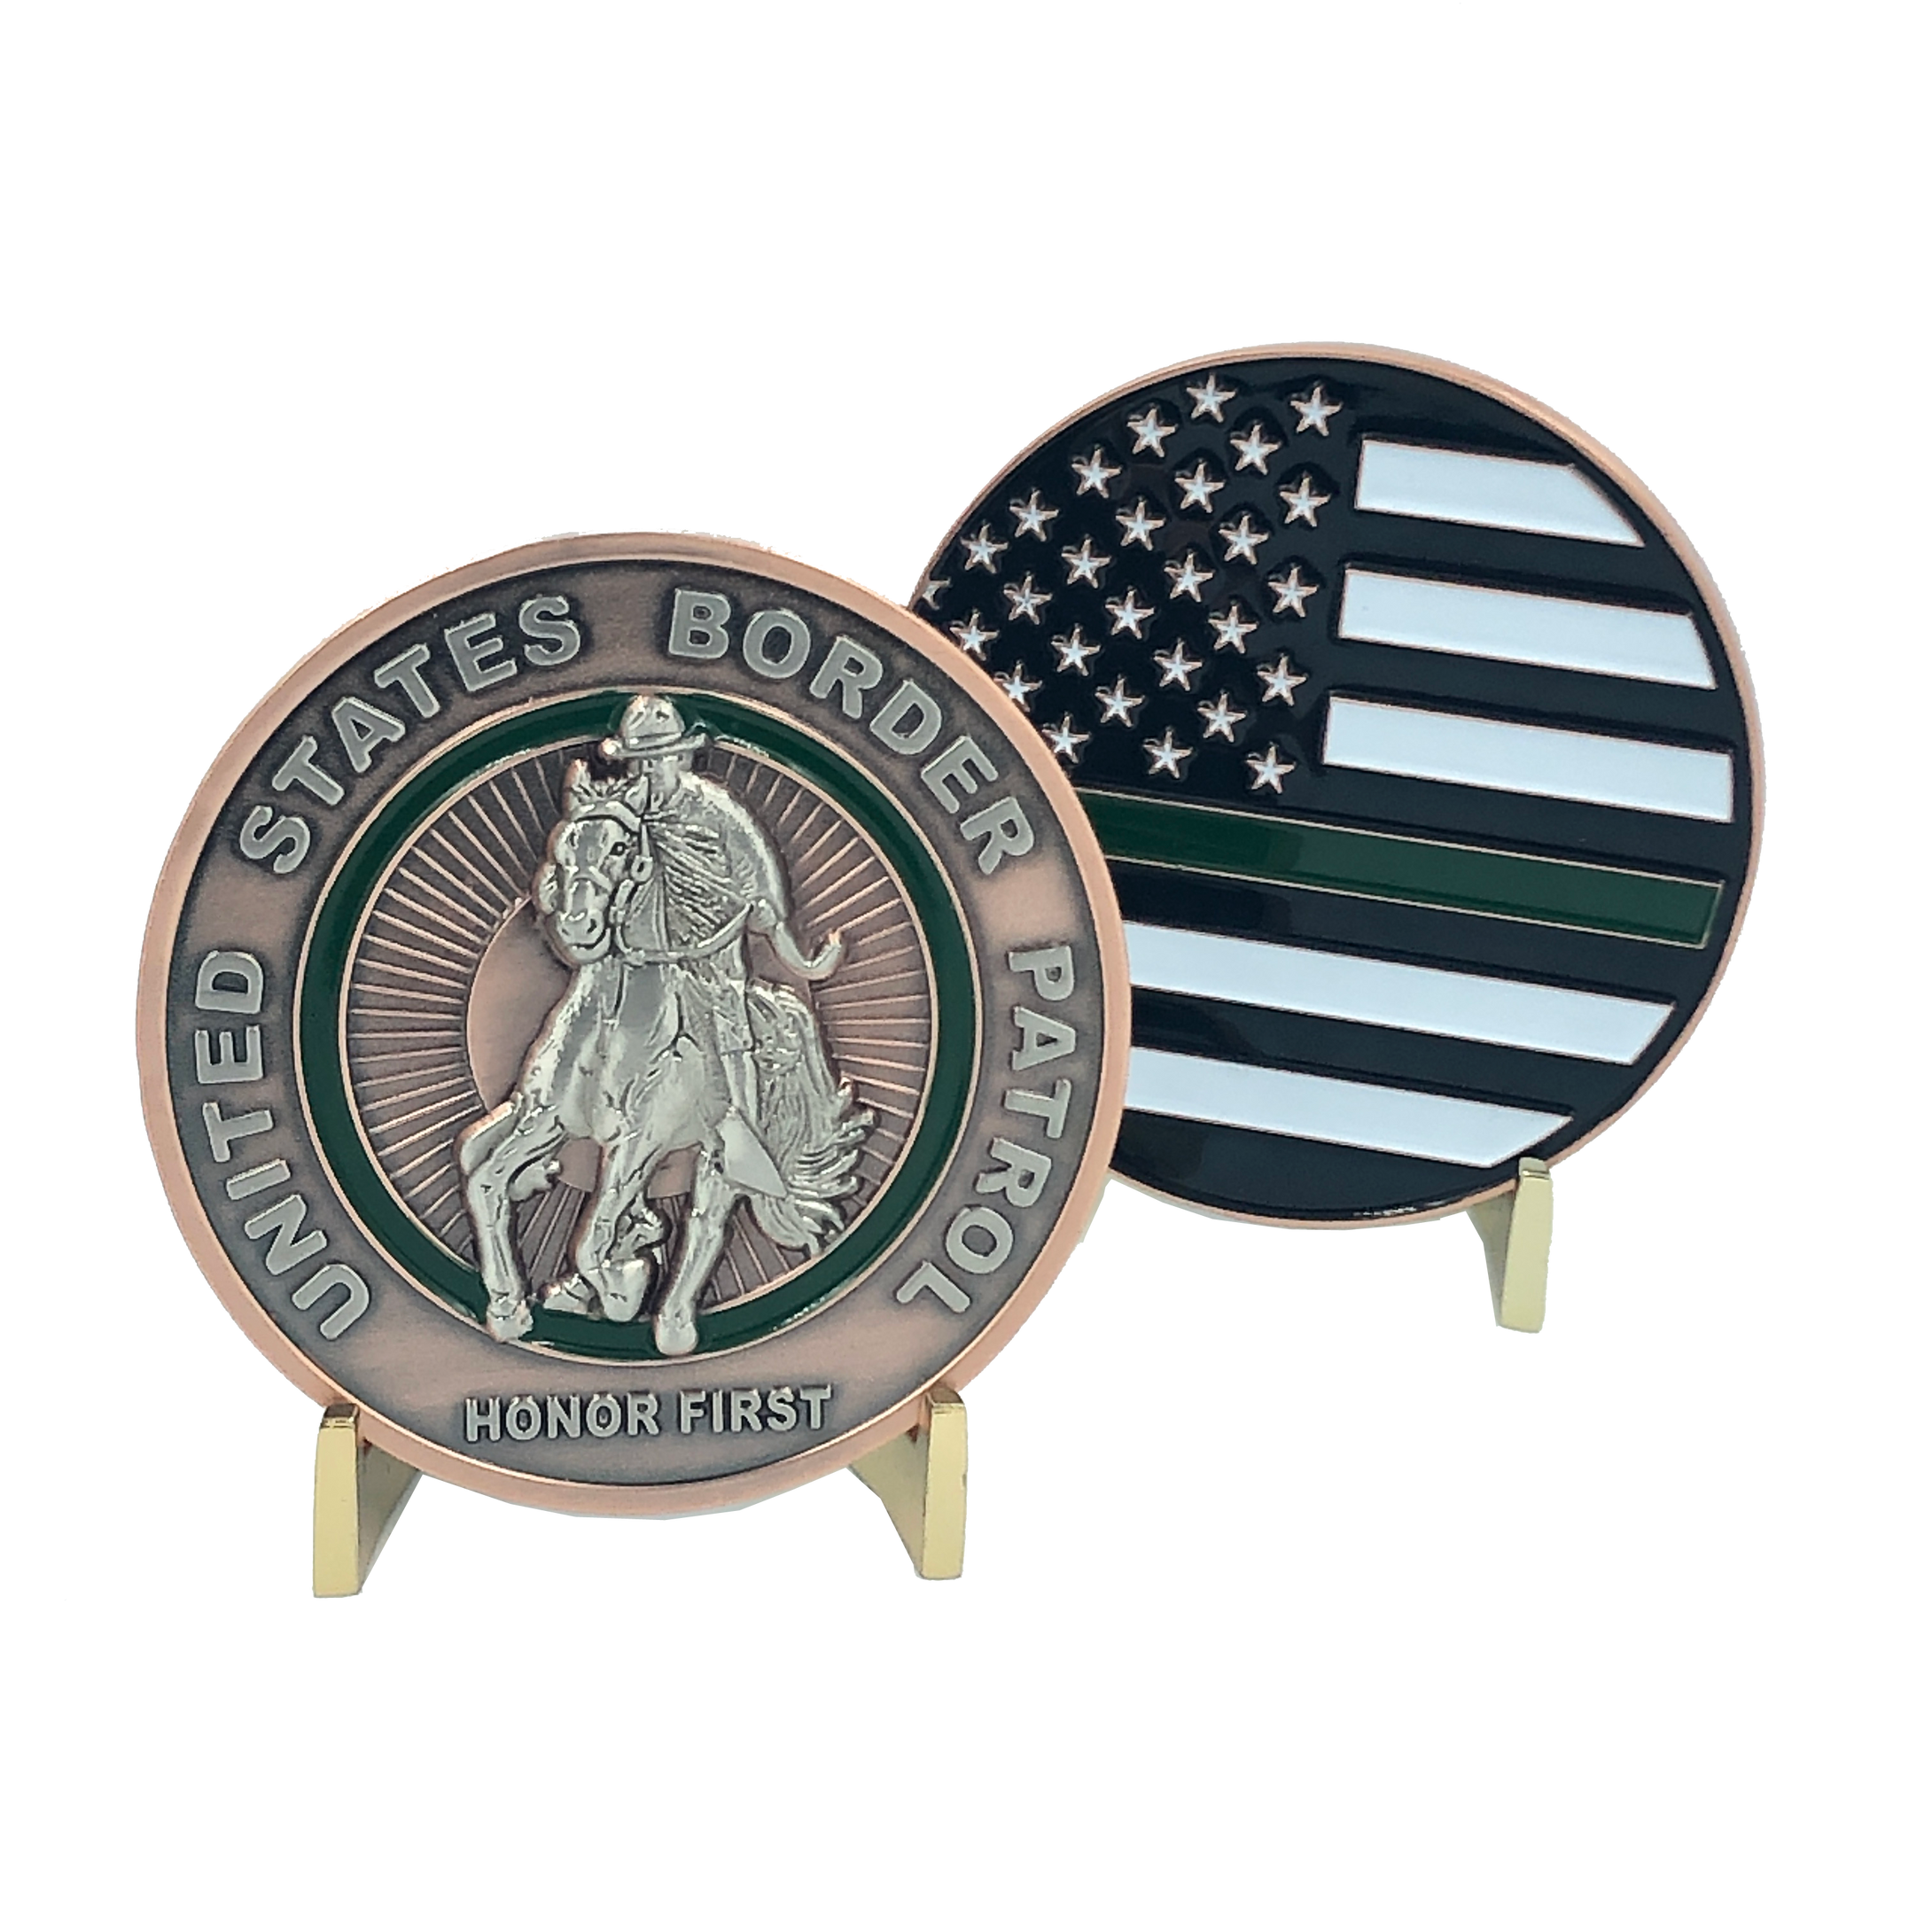 K-004 Horse Patrol Challenge Coin CBP Border Patrol